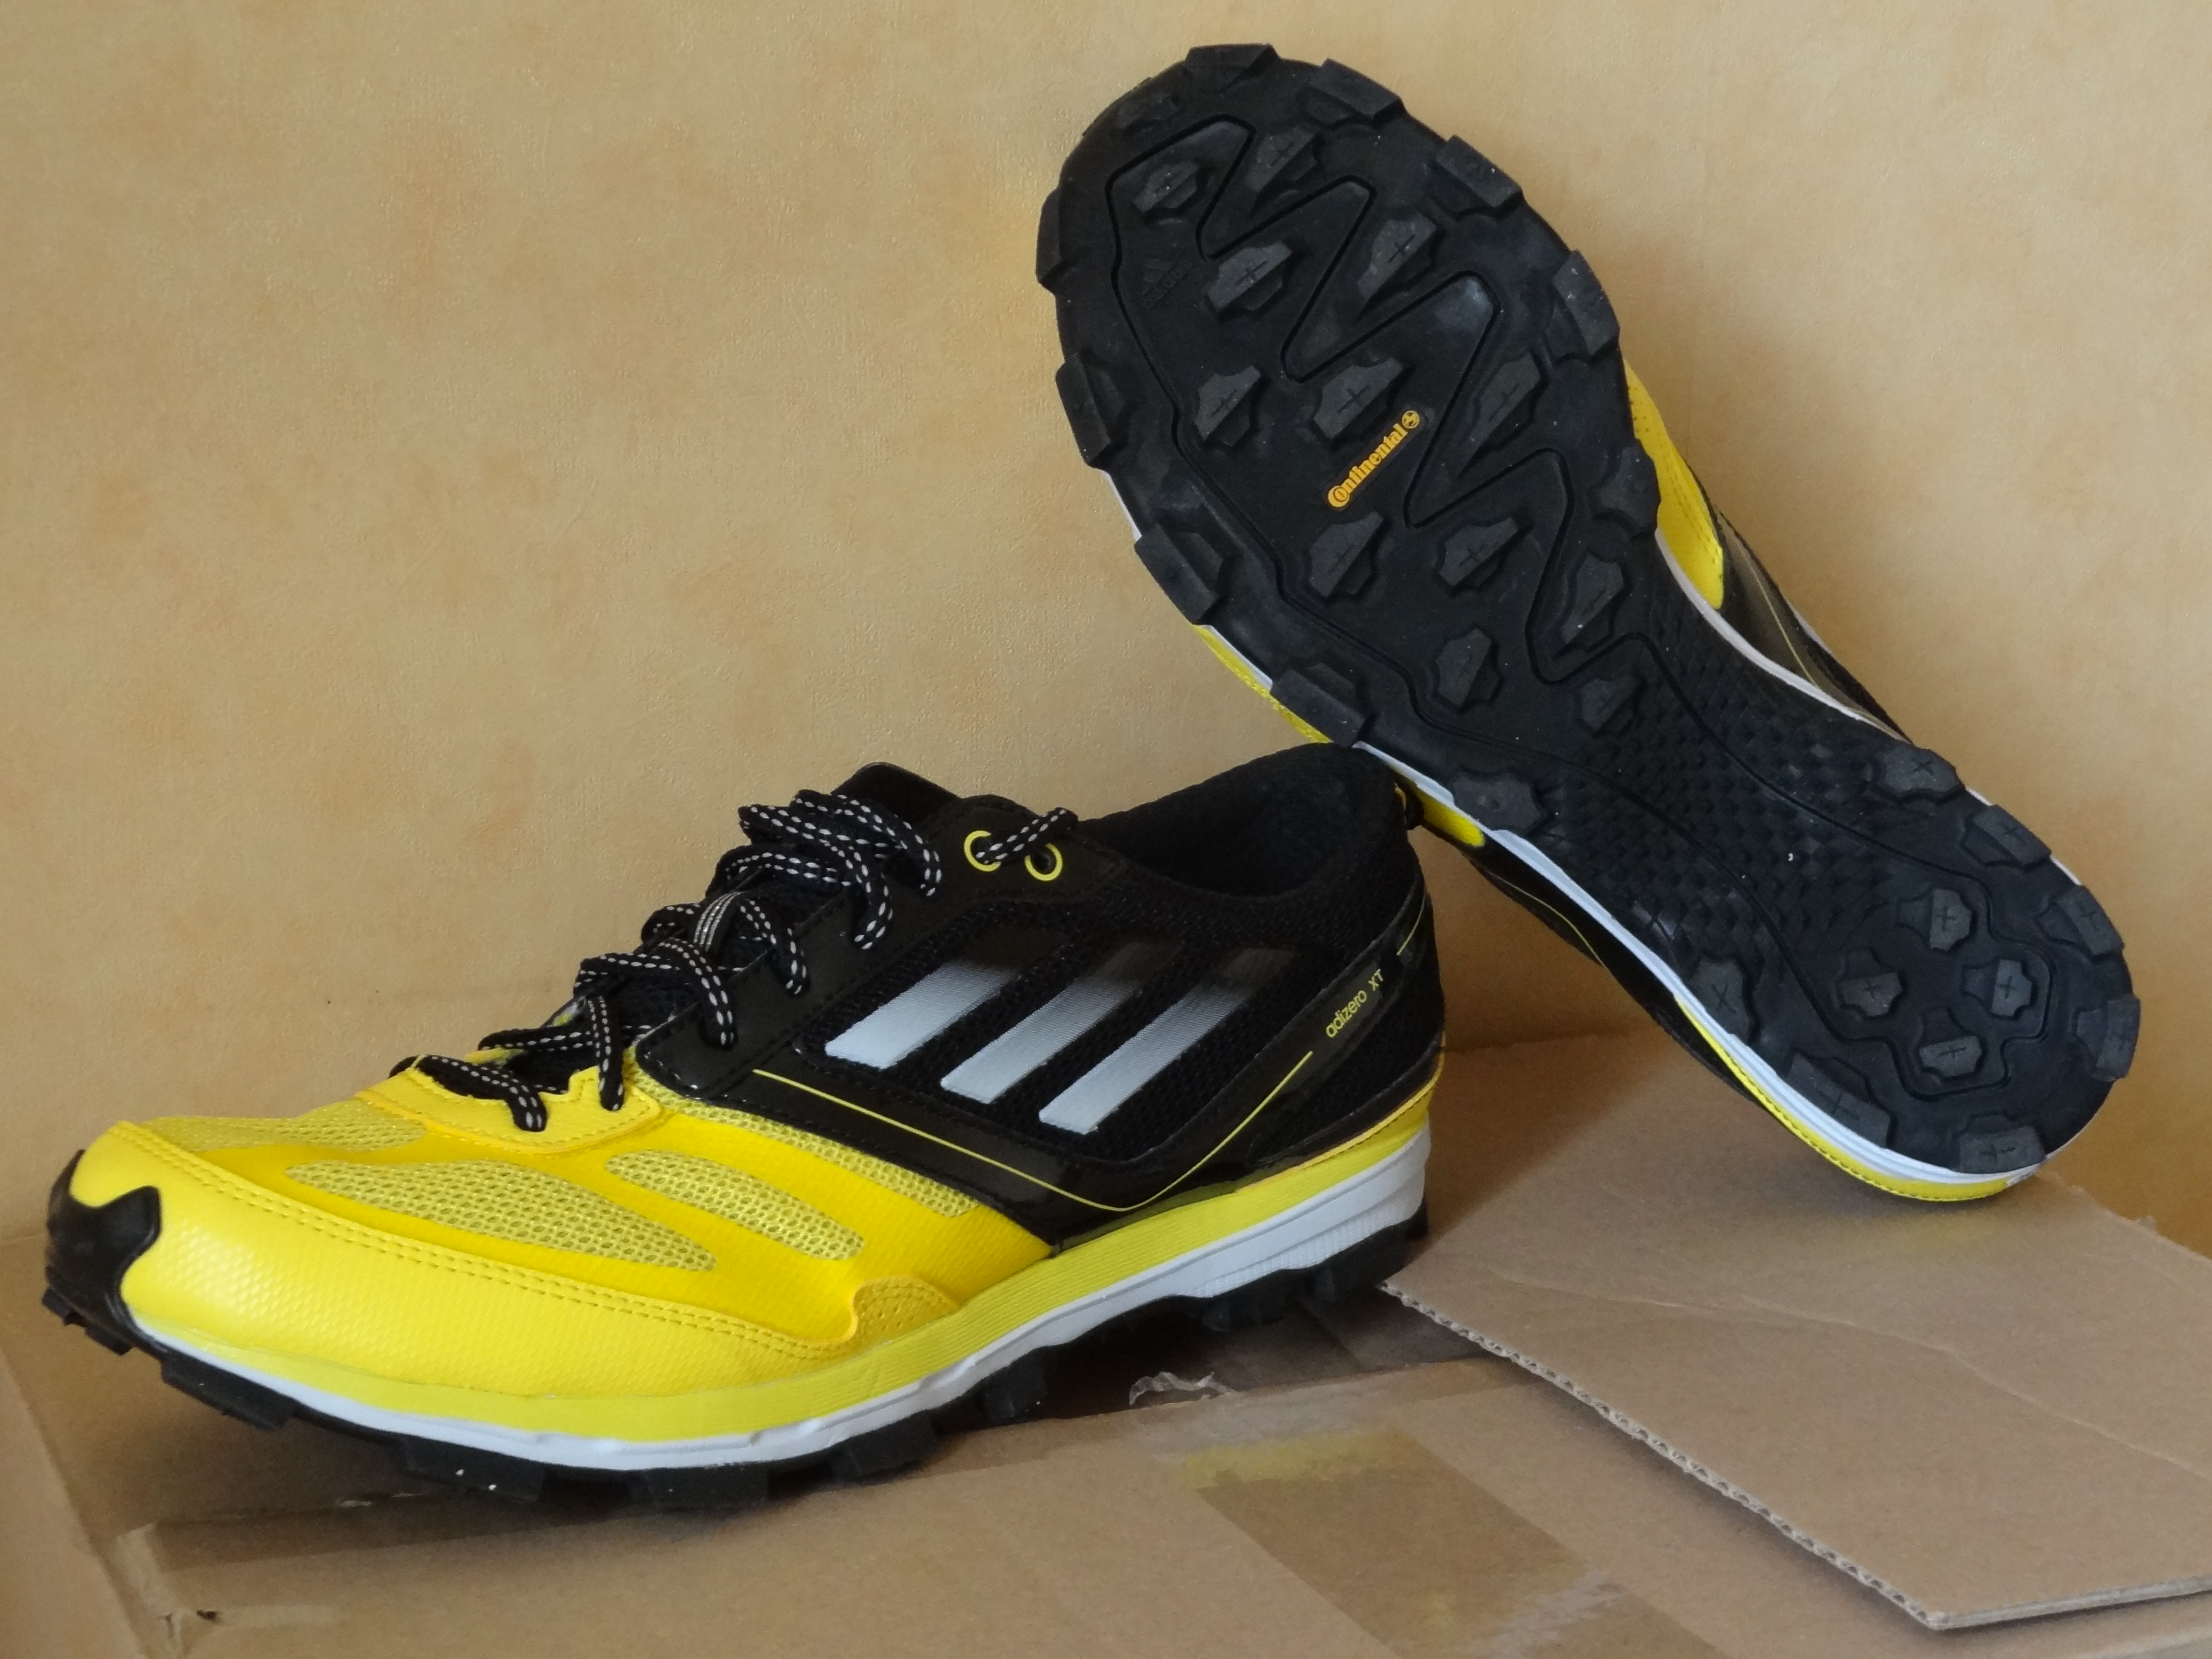 ensayo Maravilla Golpeteo Test chaussures adidas : Adizero XT 4 - U Run